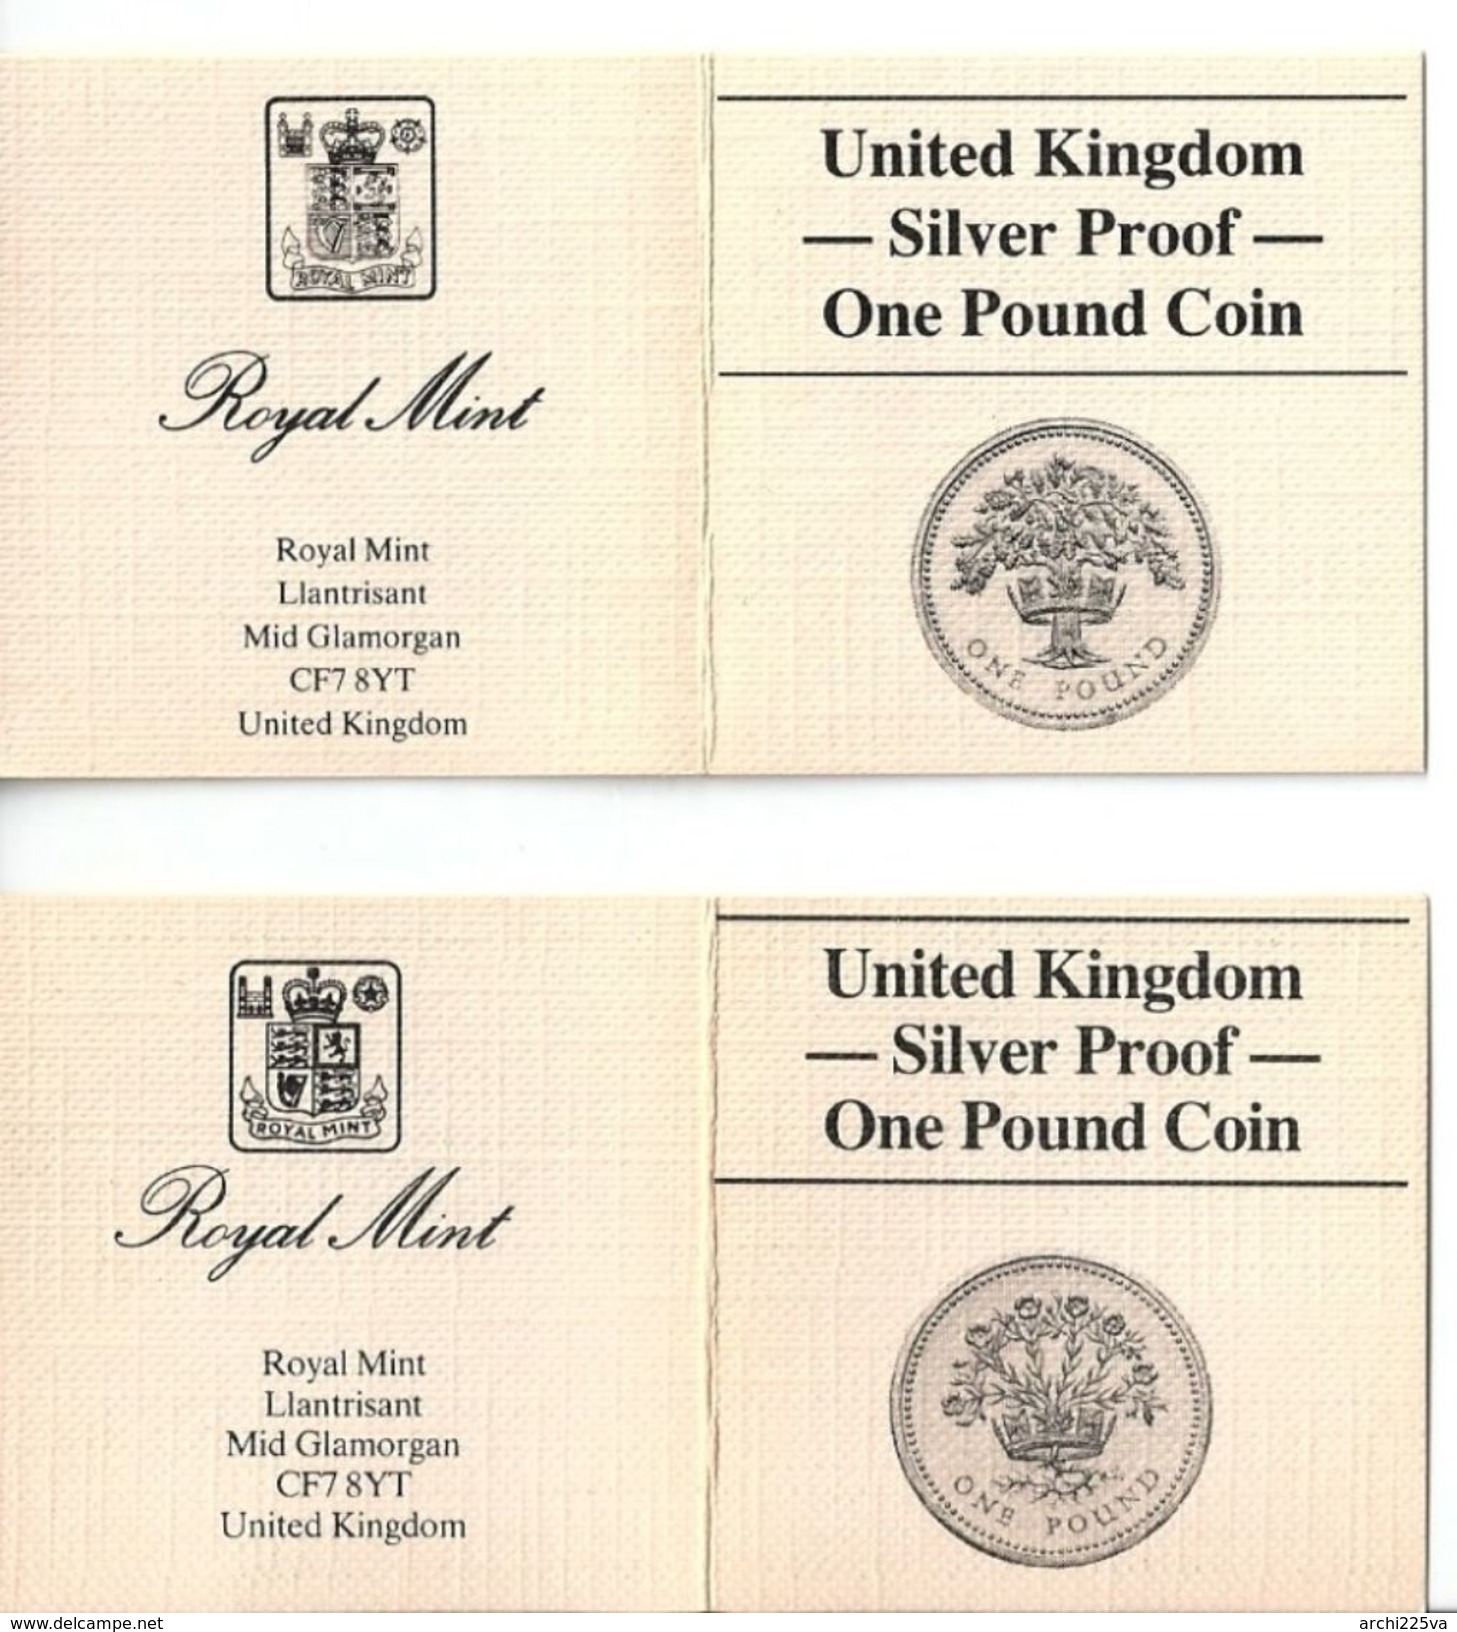 United Kingdom - 1988 / 1987 fiori - 2 ONE POUD - FDC Proof - Argento / Argent / Silver 925 - conf. originale